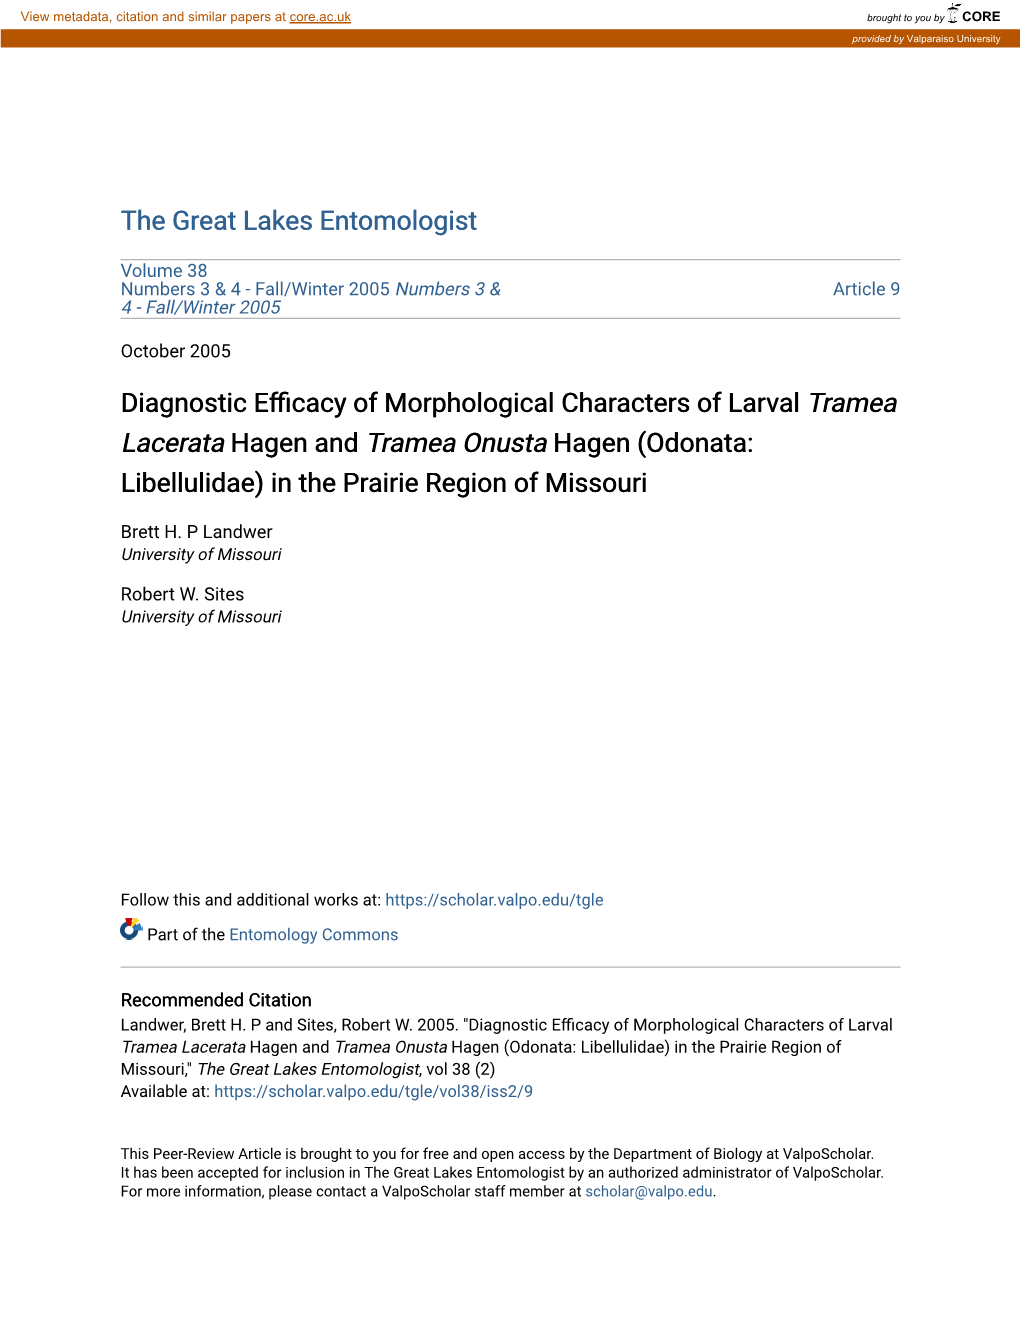 Diagnostic Efficacy of Morphological Characters of Larval Tramea Lacerata Hagen and Tramea Onusta Hagen (Odonata: Libellulidae) in the Prairie Region of Missouri